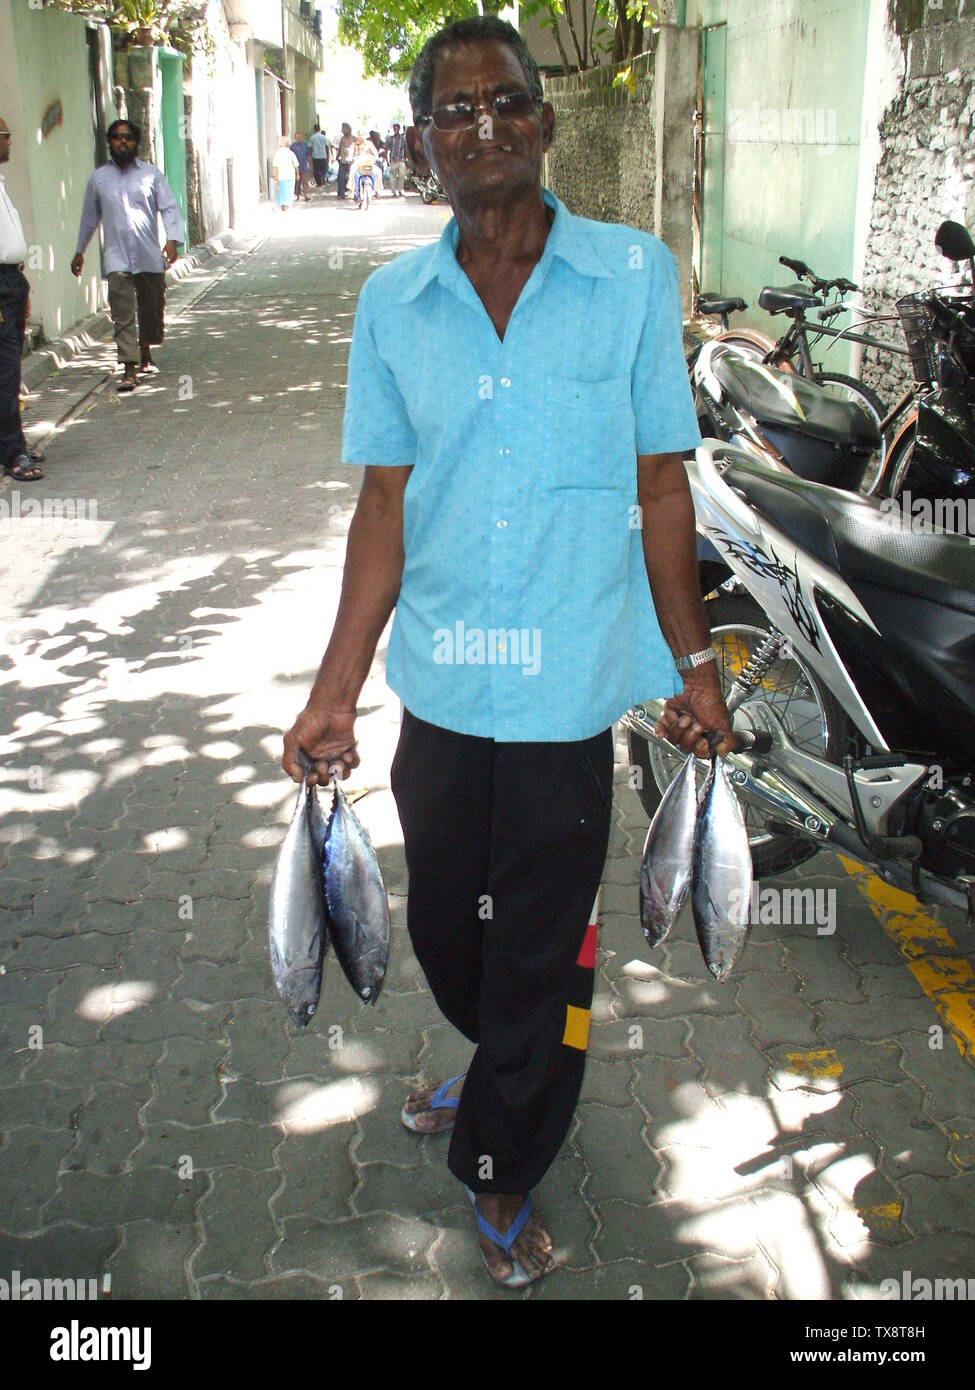 A man from Maldives with Tuna fishà´®à´²à´¯à´¾à´³à´‚: à´®à´¾à´²à´¦àµà´µàµ€à´ªà´¿à´²àµ† à´’à´°àµ à´¤àµ†à´°àµà´µà´¿àµ½ à´•à´£àµà´Ÿ à´¦àµƒà´¶àµà´¯à´‚ - à´žà´¾àµ» à´•àµà´¯à´¾à´®à´±à´¯à´¿àµ½ à´ªà´•àµ¼à´¤àµà´¤à´¿à´¯à´¤àµ.; 10 June 2007; Transferred from ml.pedia to Commons by Sreejithk2000 using CommonsHelper.; Kalesh at Malayalam pedia; Stock Photo